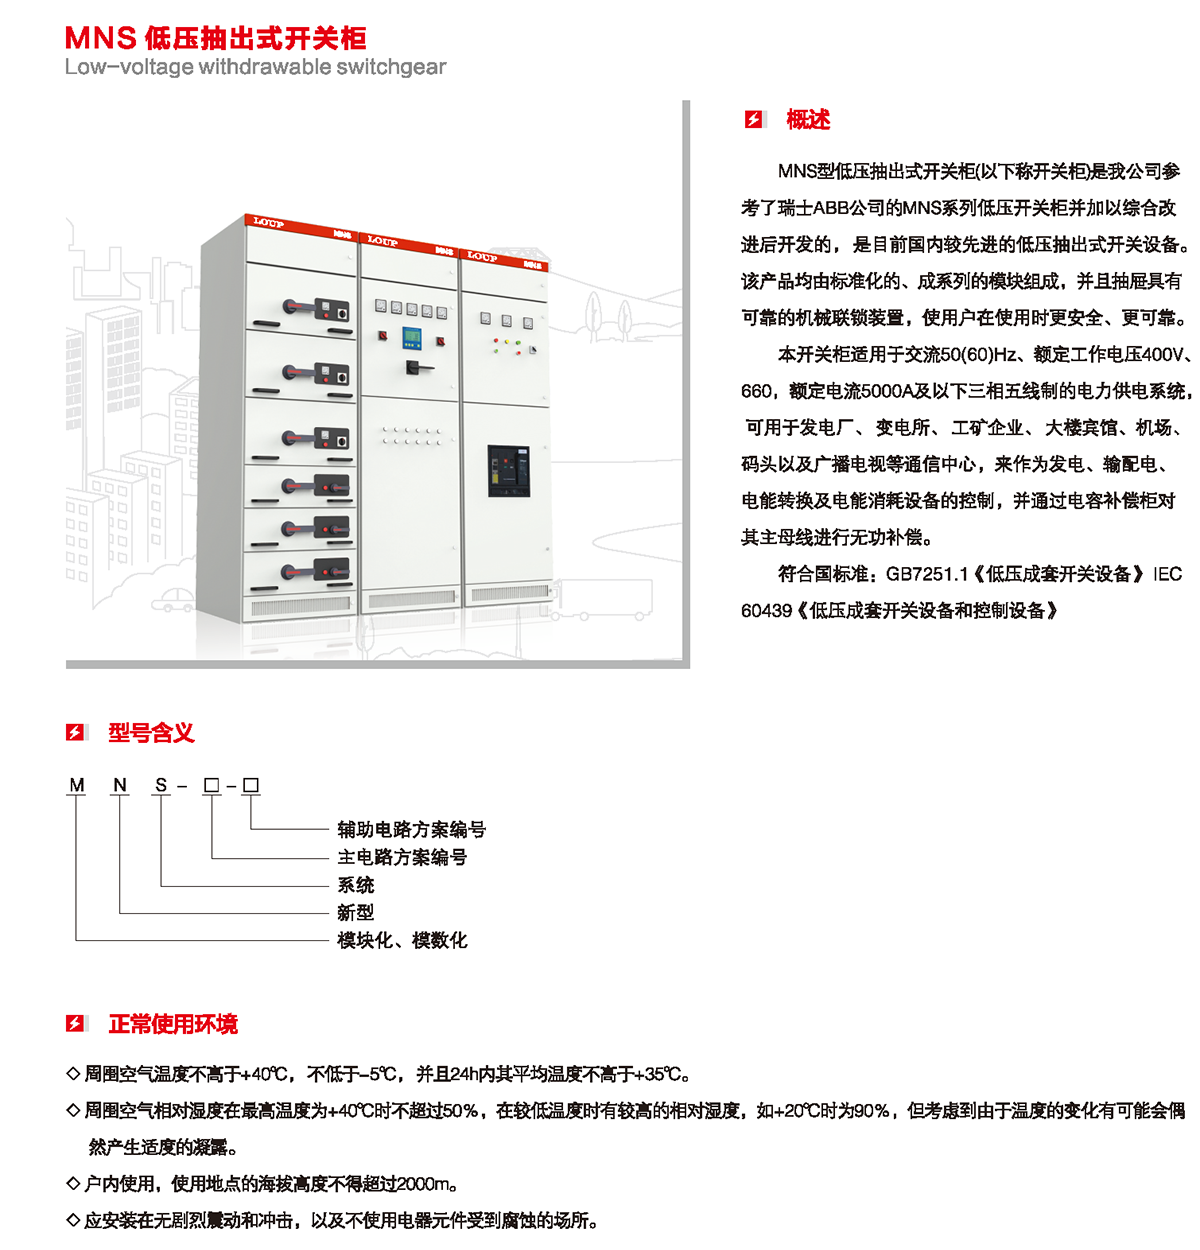 MNS低壓抽出式開關柜概述、型號含義、正常使用環境